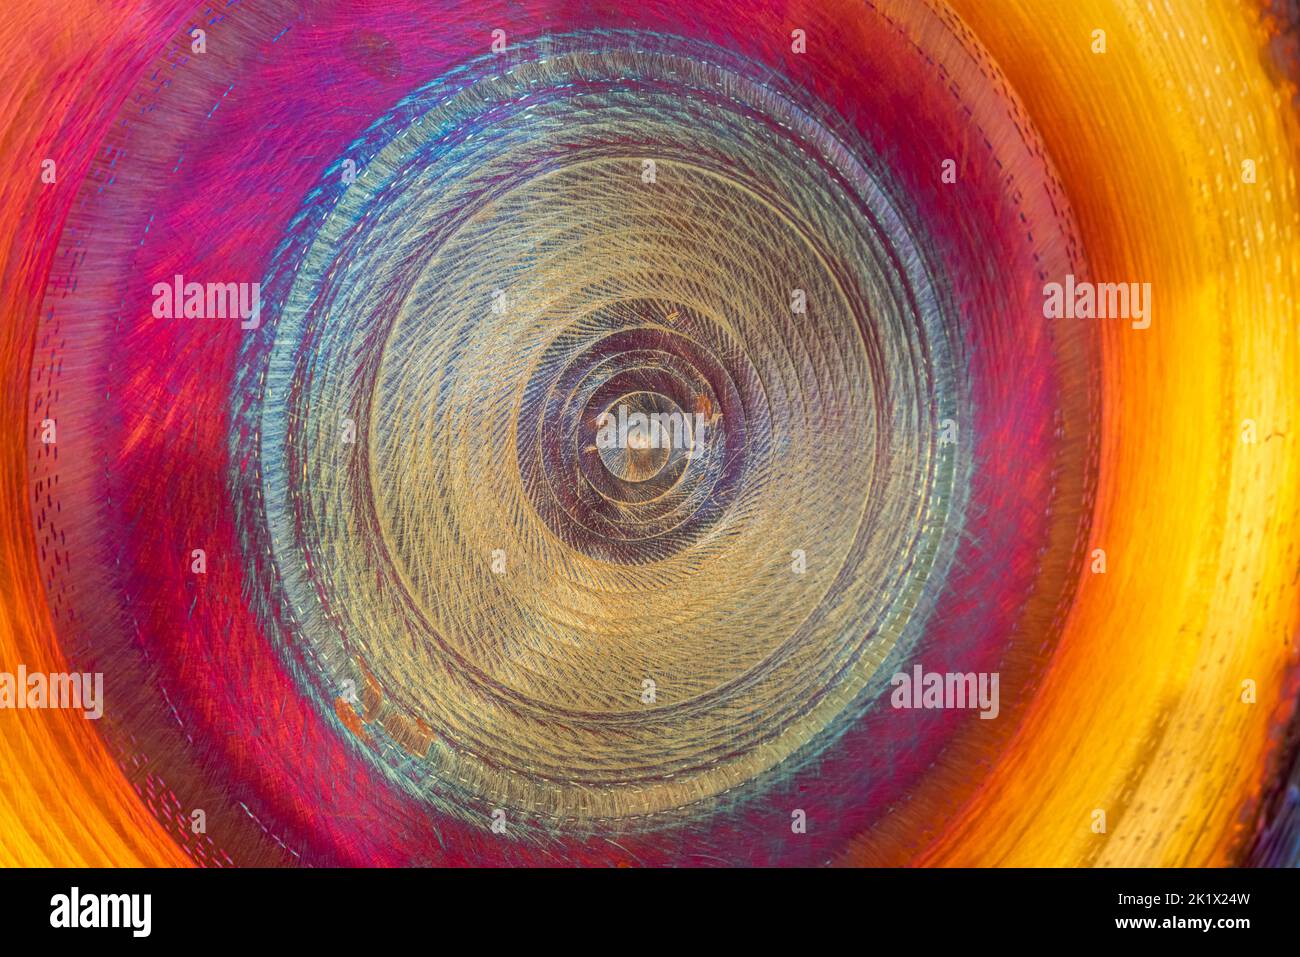 Imagen abstracta de fotograma completo de un colorido gong metálico Foto de stock